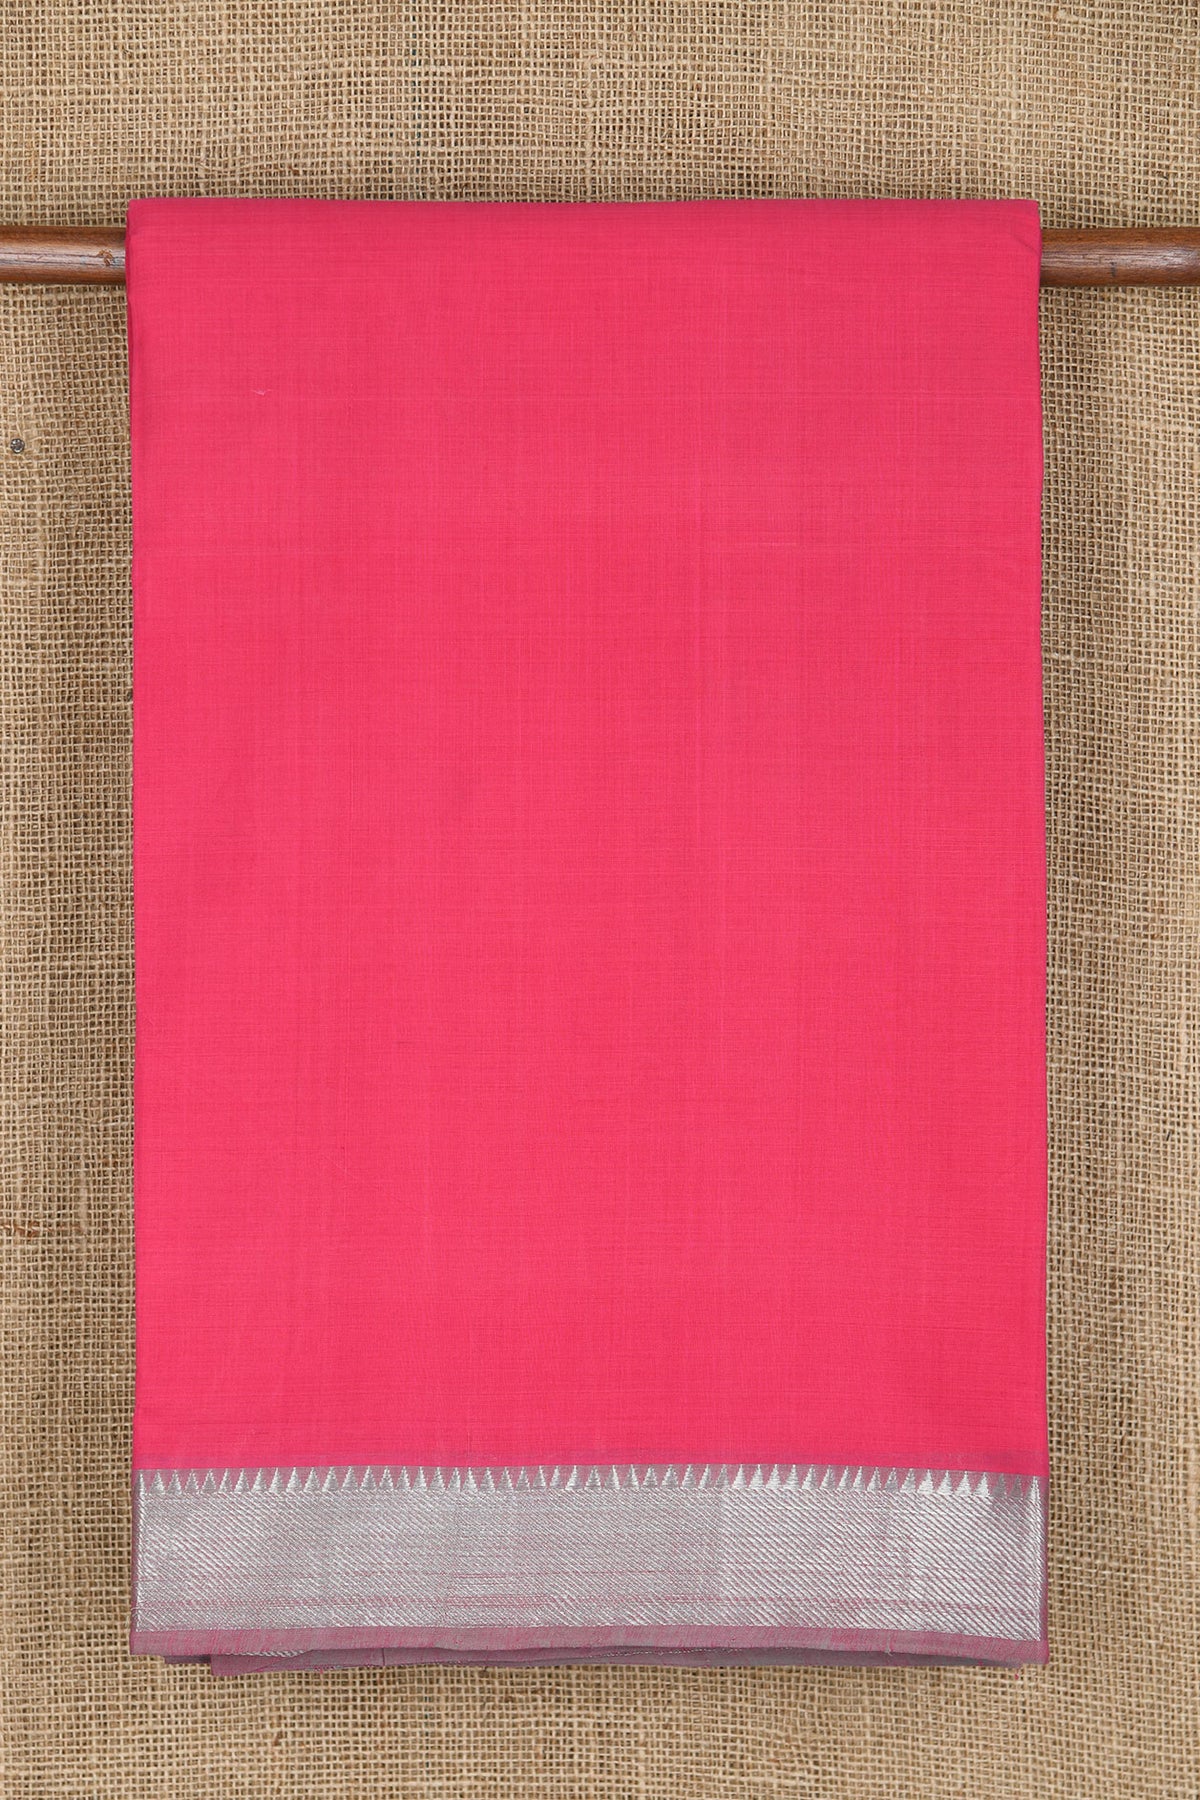 Twill Weave Silver Zari Border In Plain Hot Pink Mangalagiri Cotton Saree